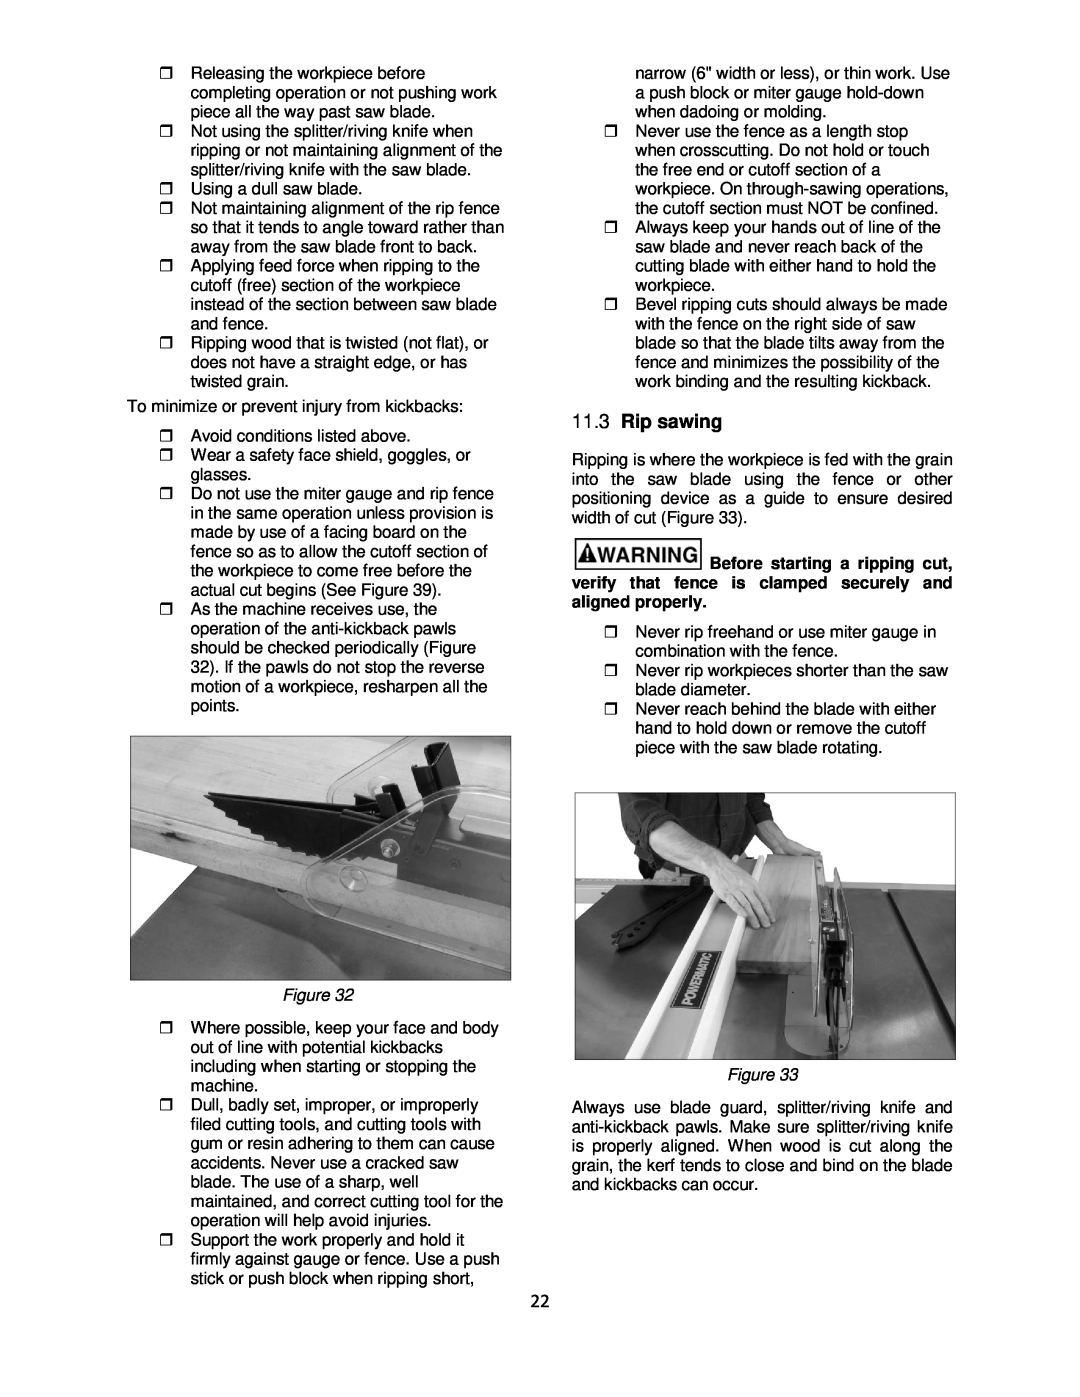 Powermatic 64B operating instructions Rip sawing 